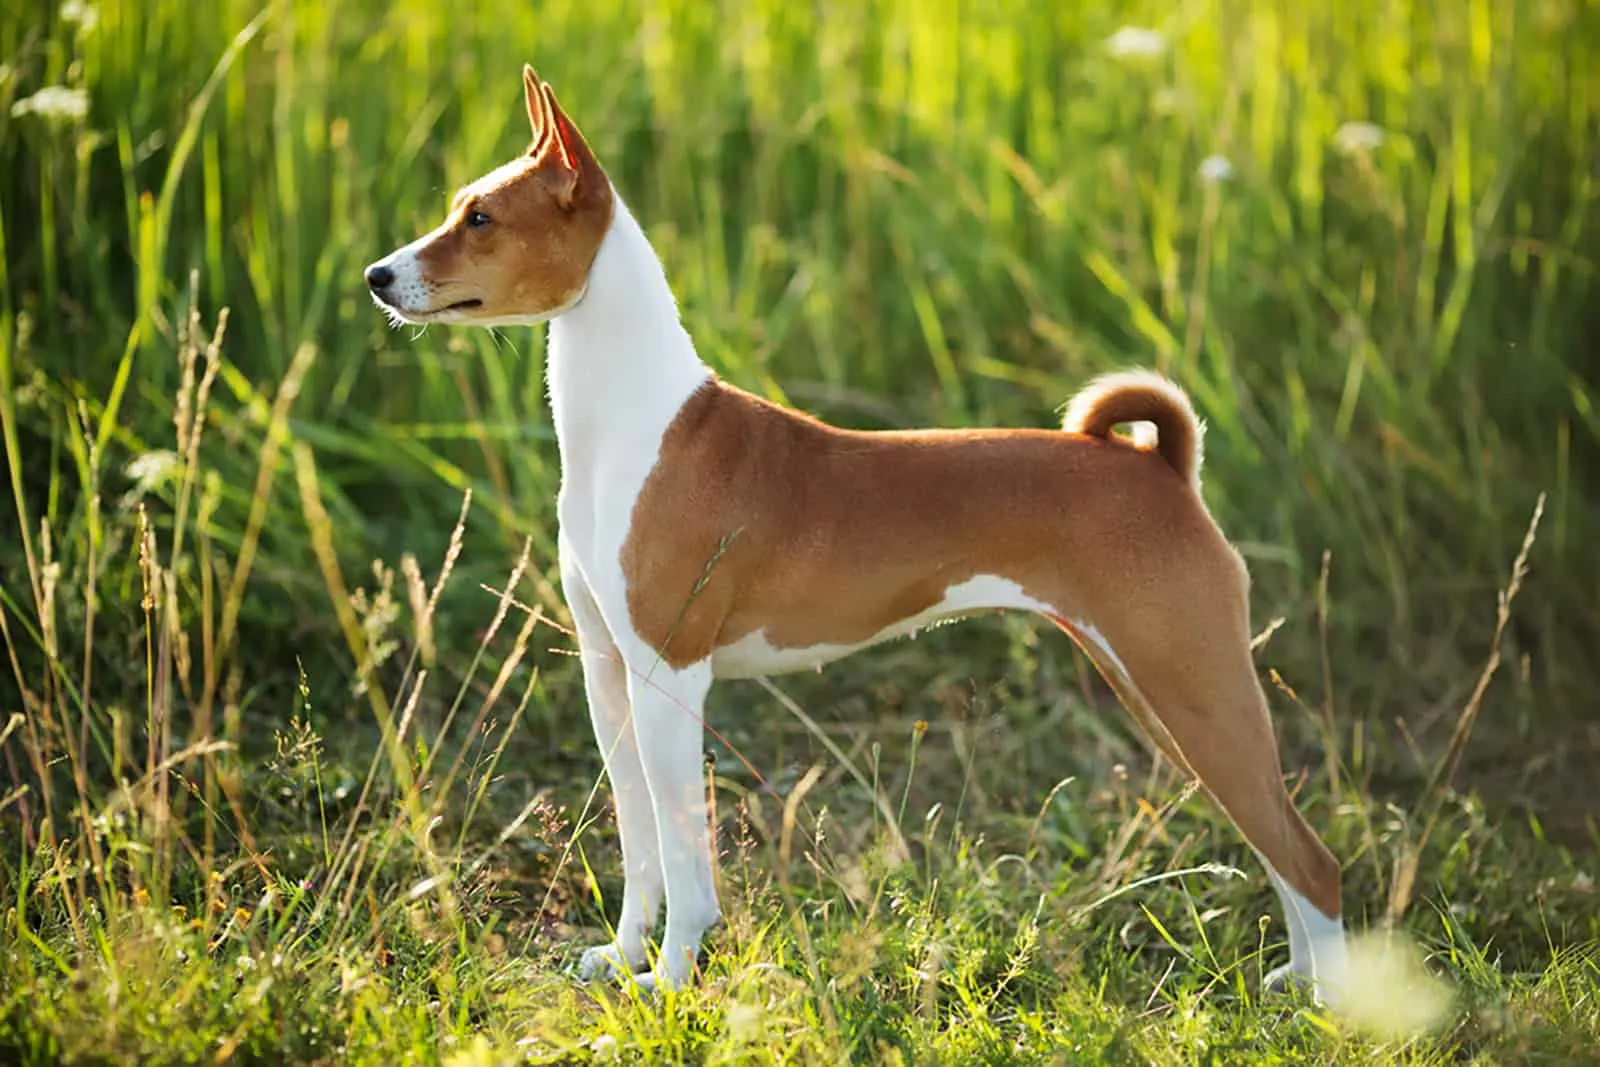 besenji dog standing in the field